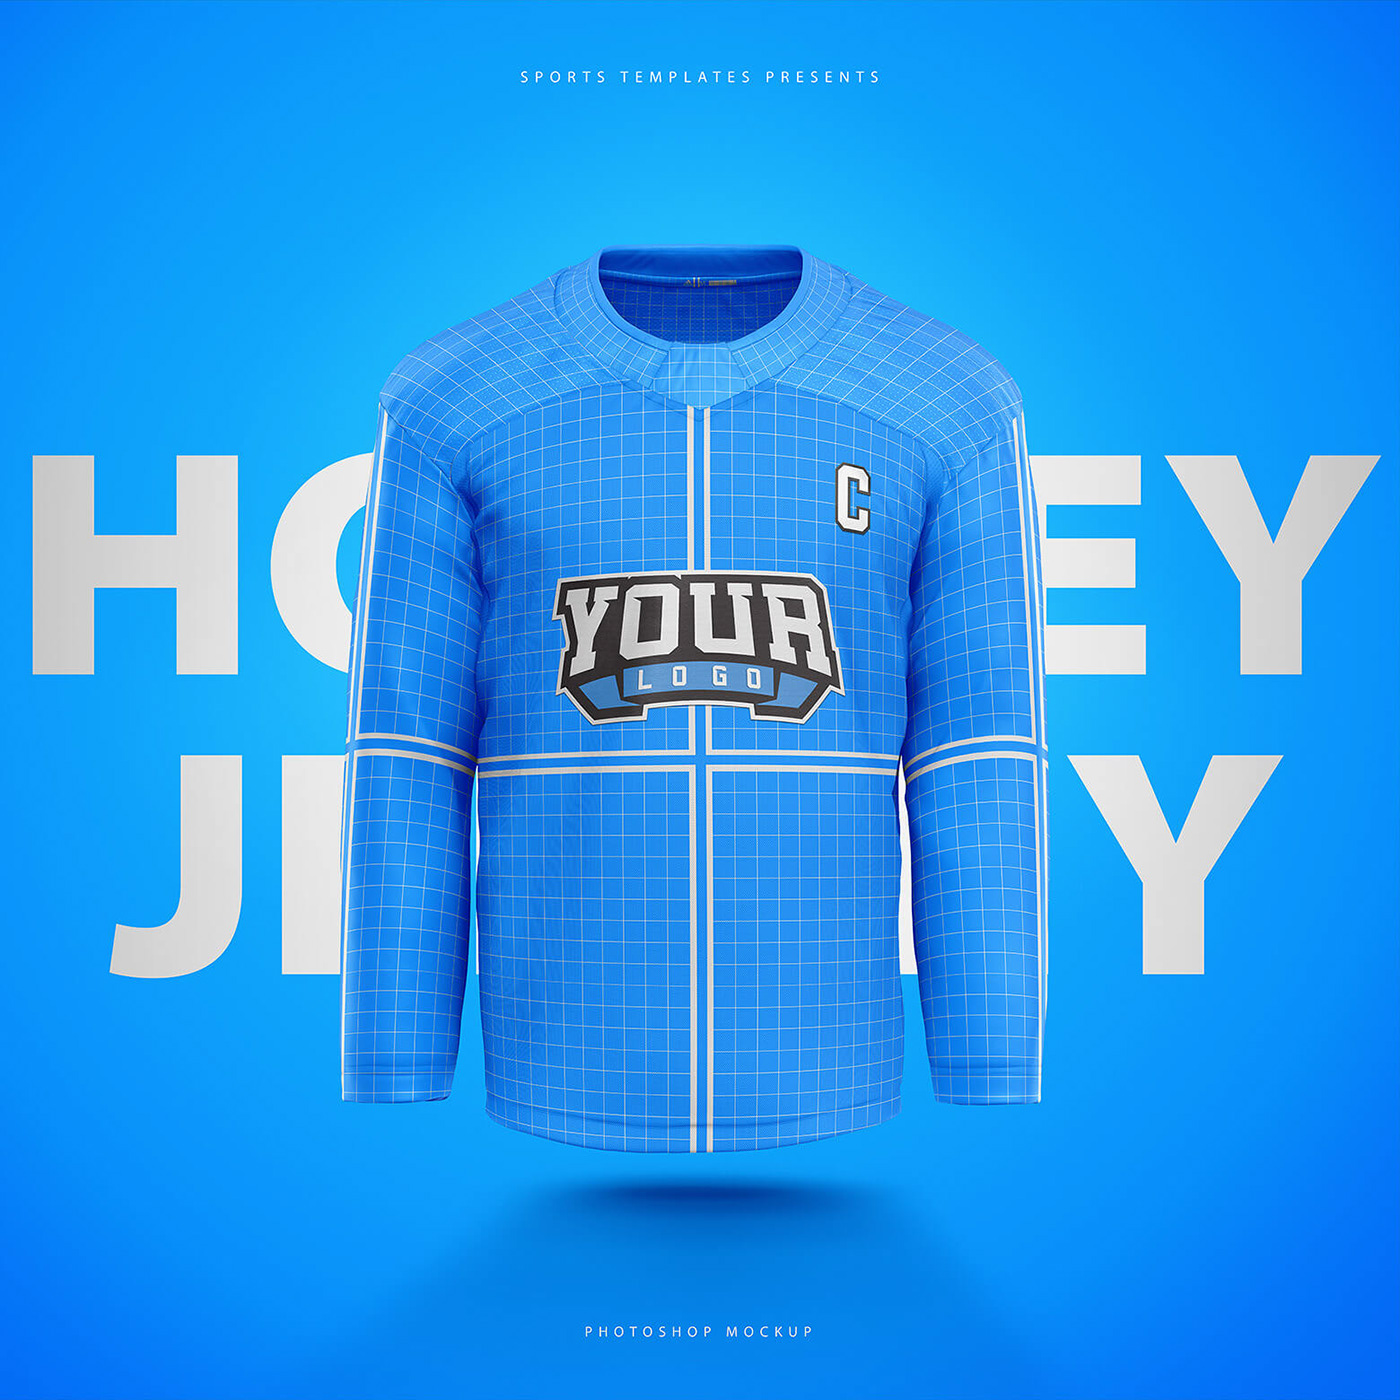 hockey jersey adidas adizero psd template Mockup NHL uniform ice hockey